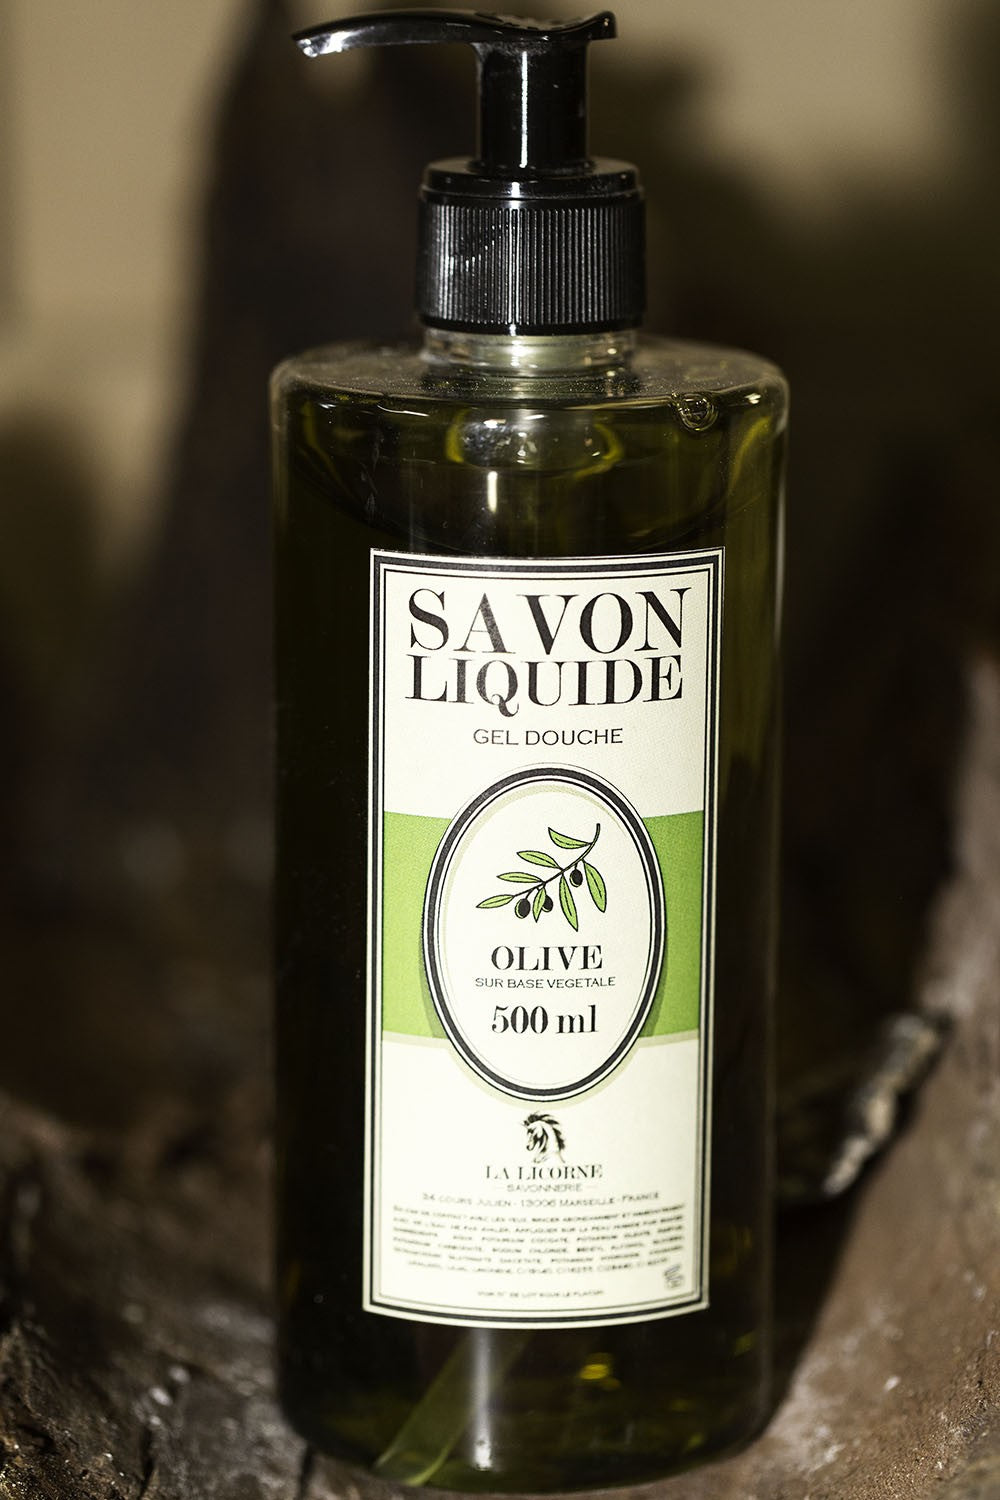 Liquid soap/shower gel - 500ml Olive